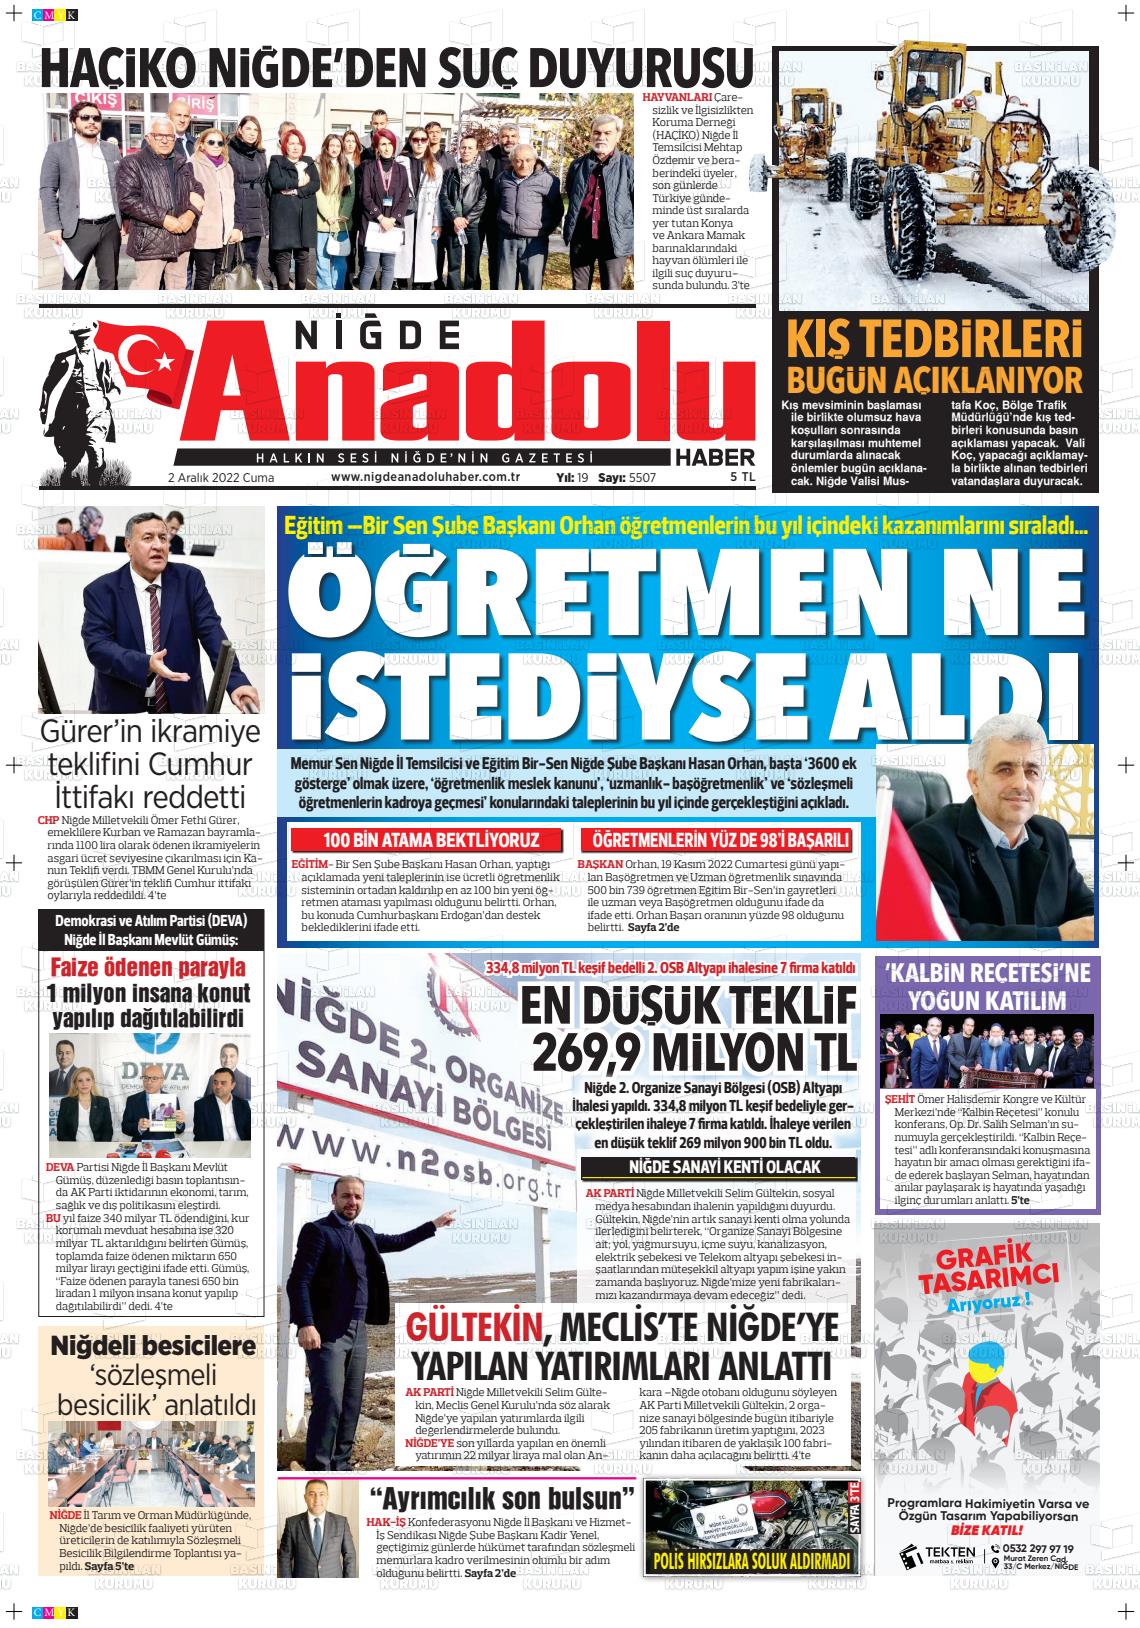 02 Aralık 2022 Niğde Anadolu Haber Gazete Manşeti